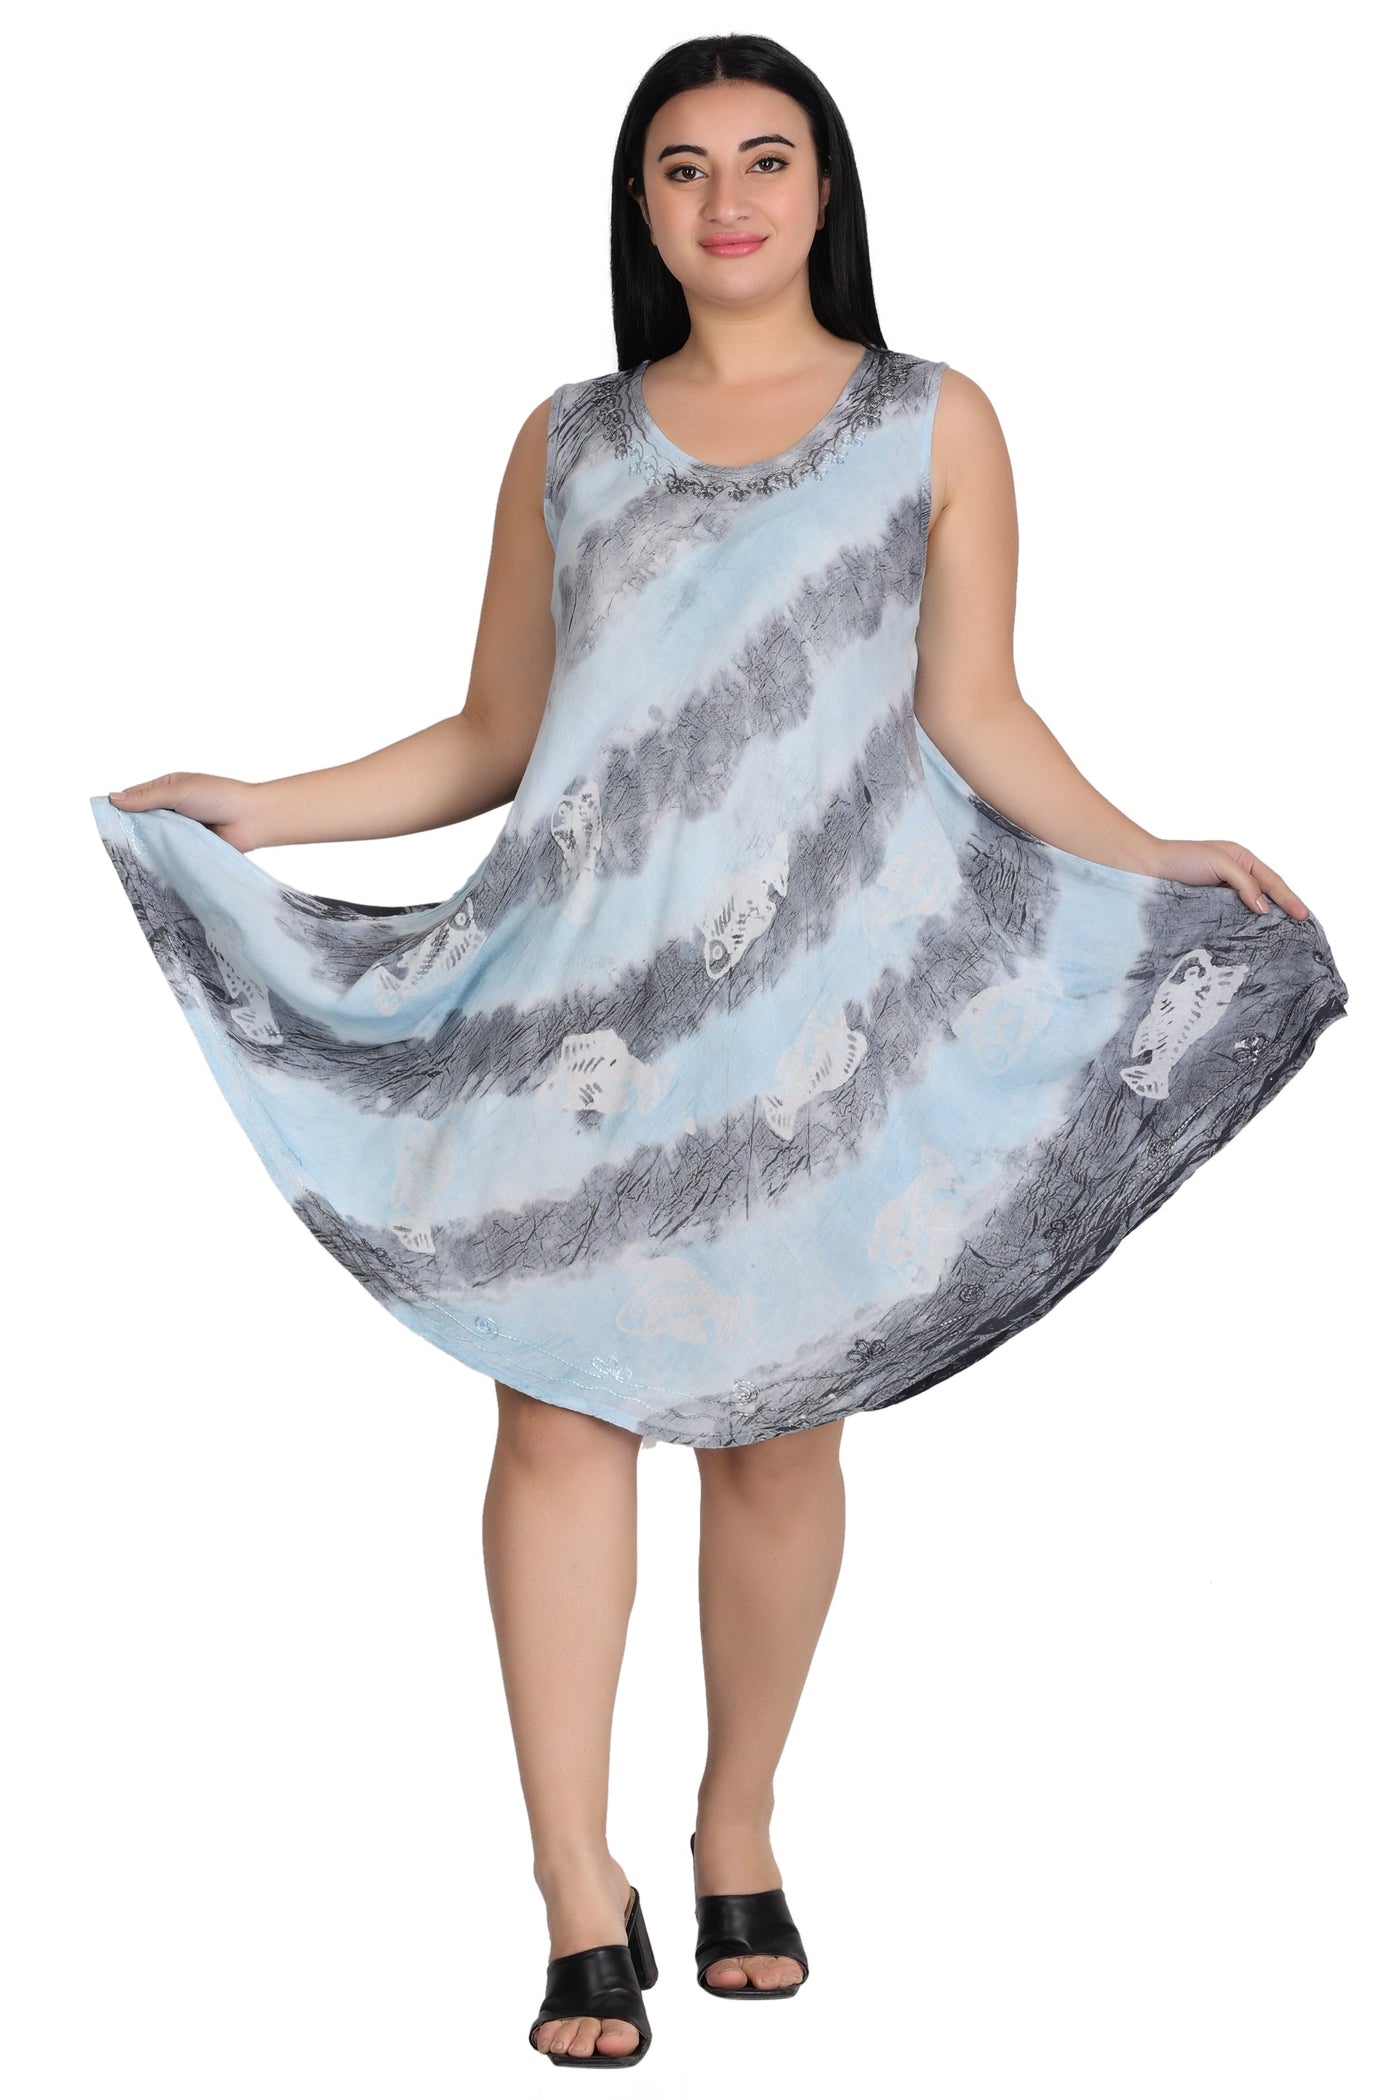 Sleeveless Fish Print Tie Dye Dress  362171R